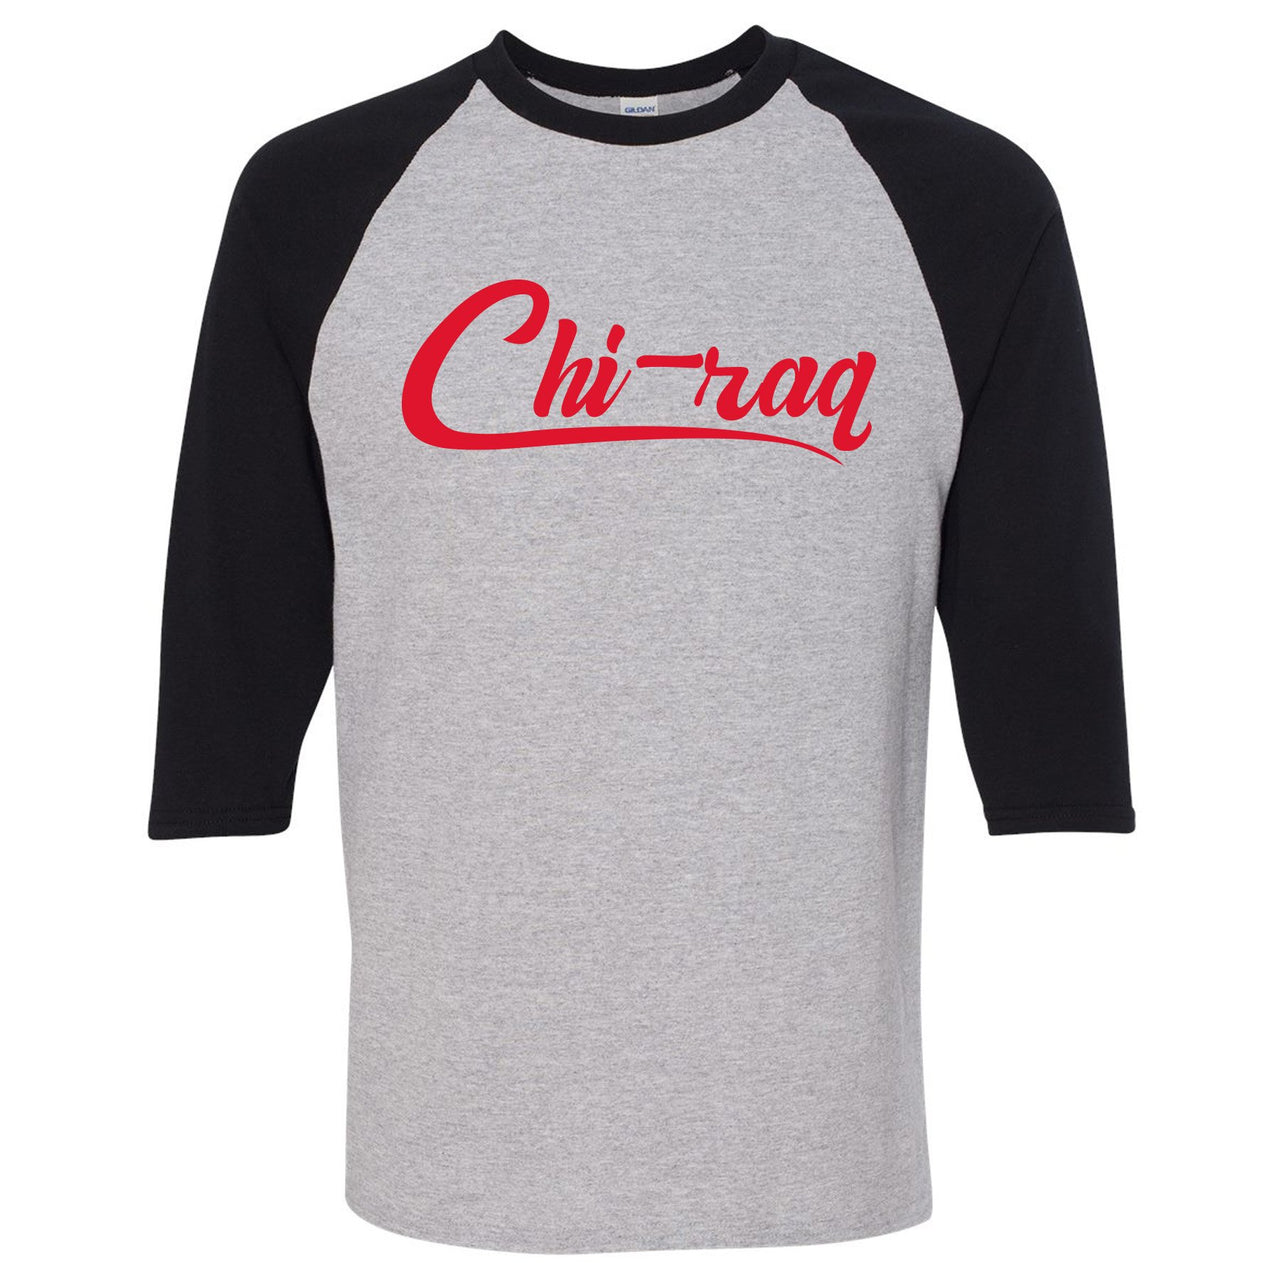 Reflections of a Champion 8s Raglan T Shirt | Chiraq Script, Sports Gray and Black